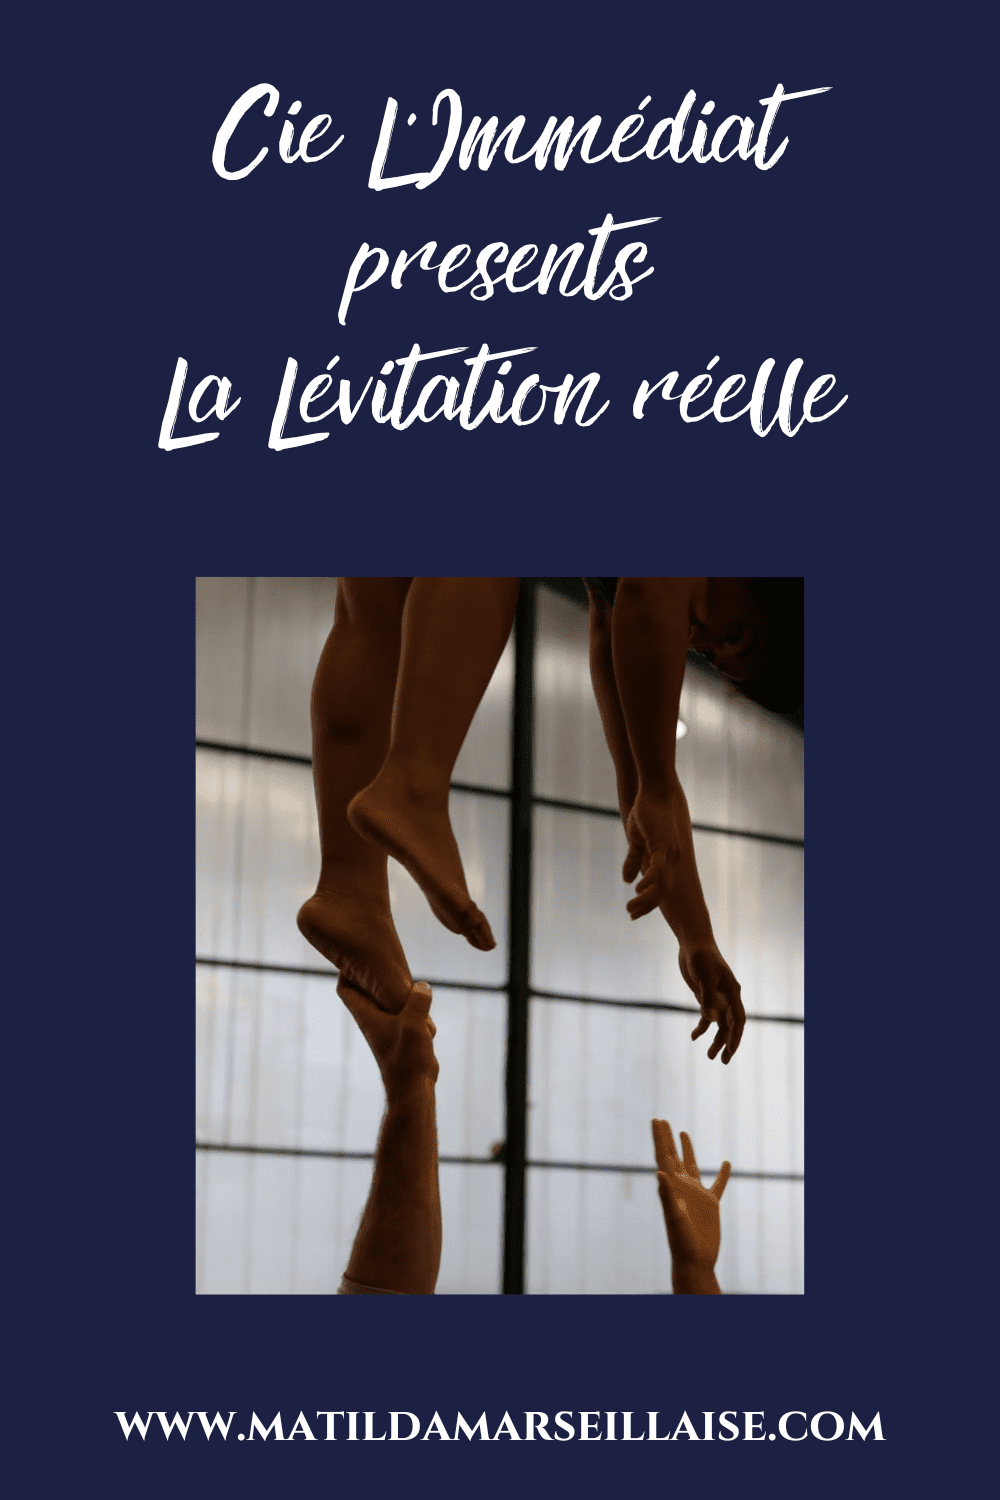 Cie L’immédiat presents La lévitation réelle at WOMADelaide this weekend